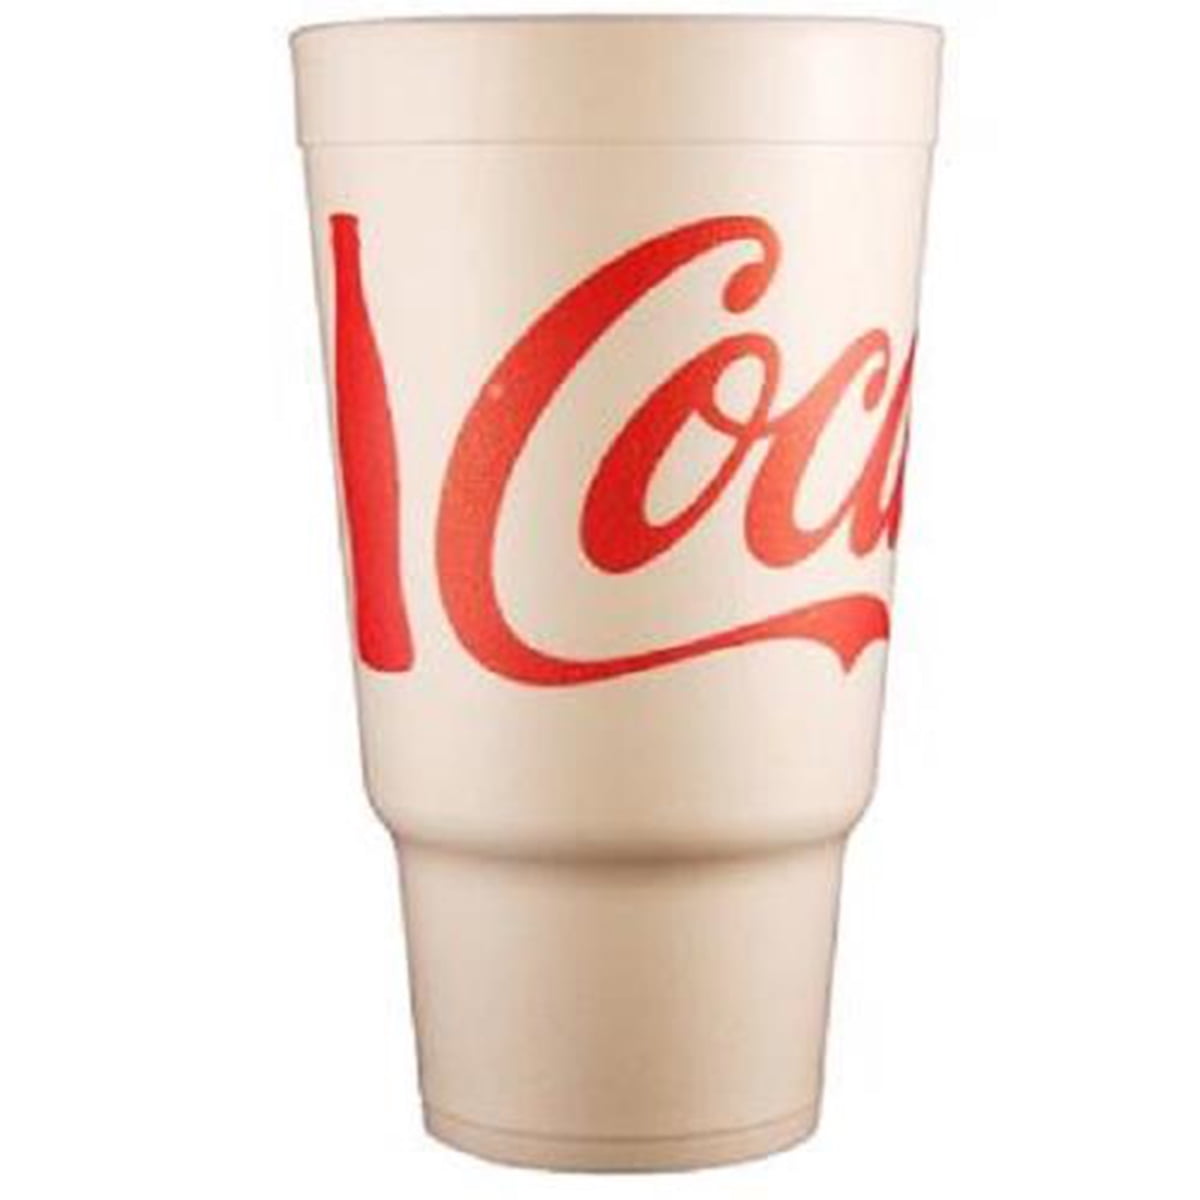 Dart Coca-Cola Foam Cups, Red/White, 24 oz